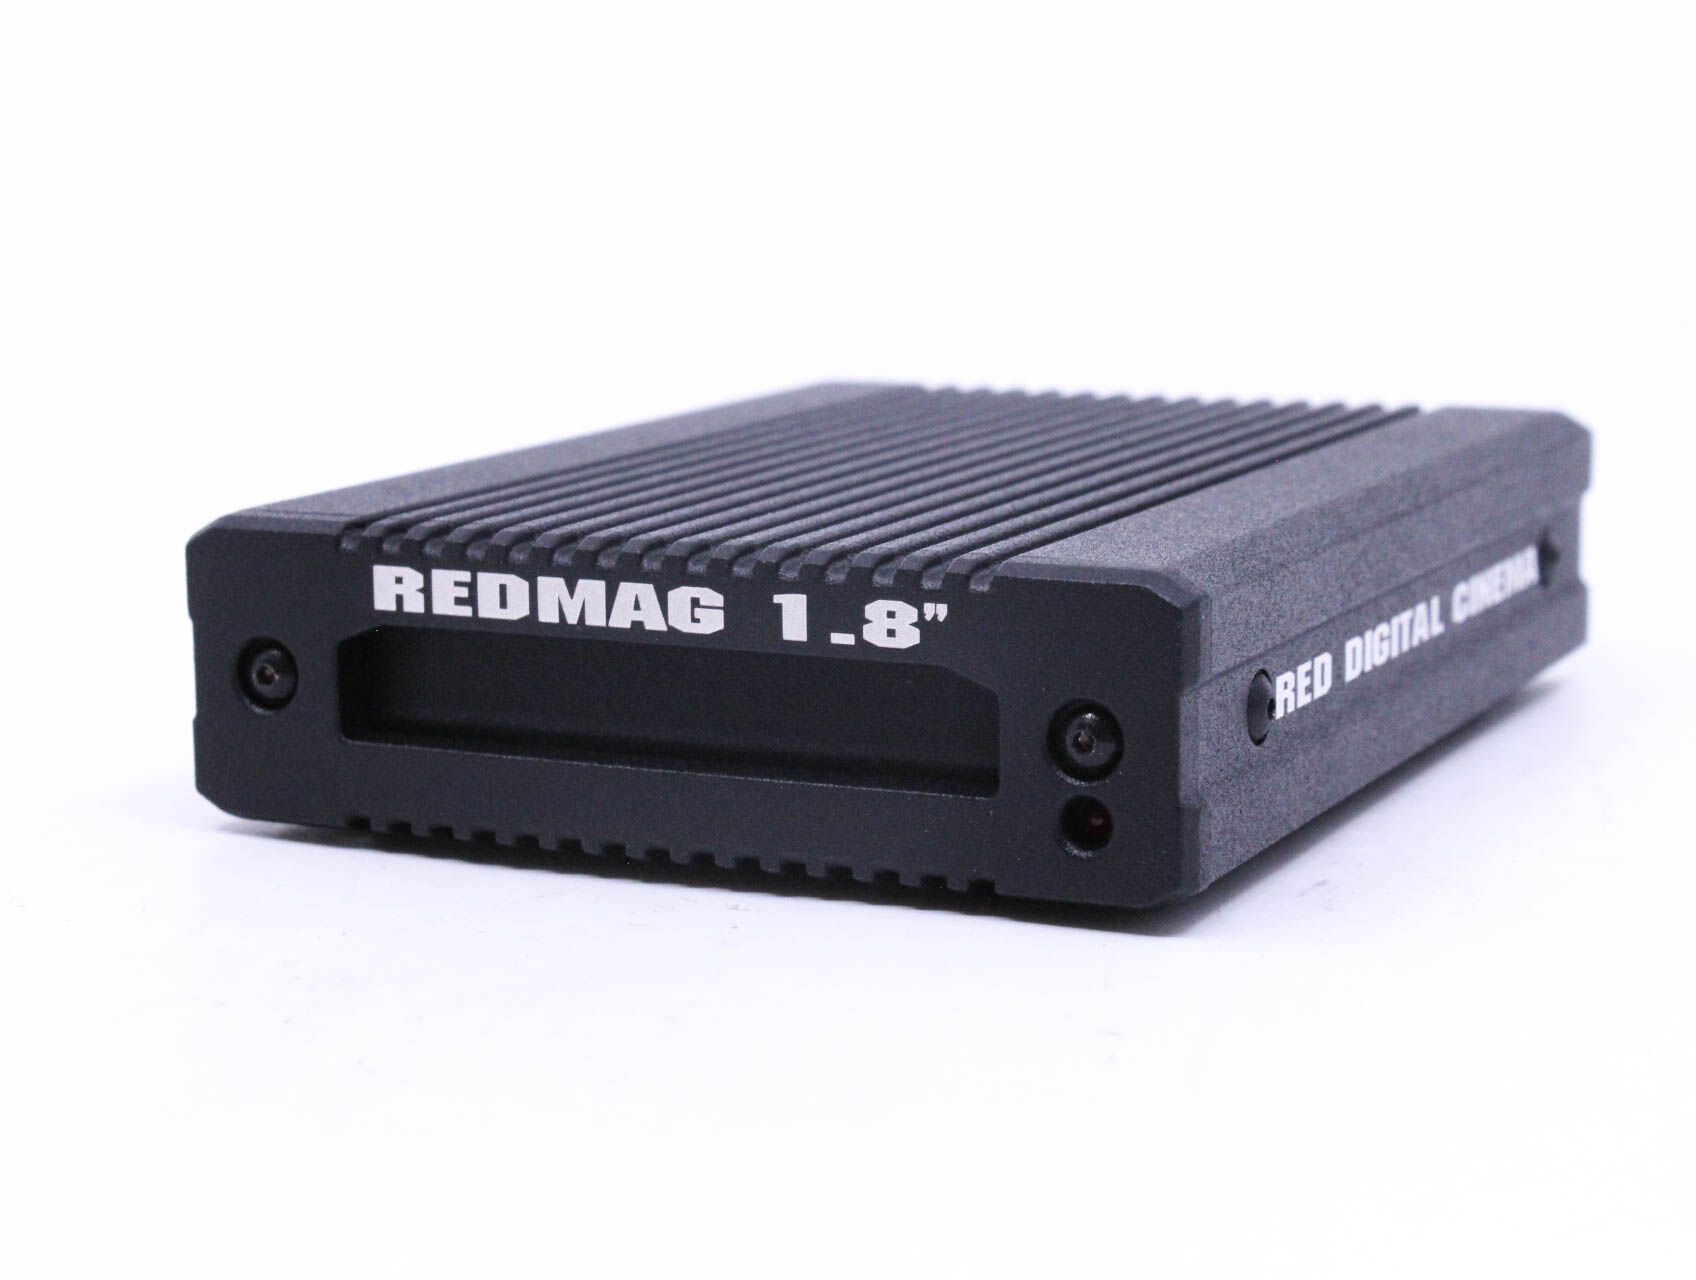 RED Digital Cinema Used Red Station Redmag 1.8" (MINI)-USB 3.0